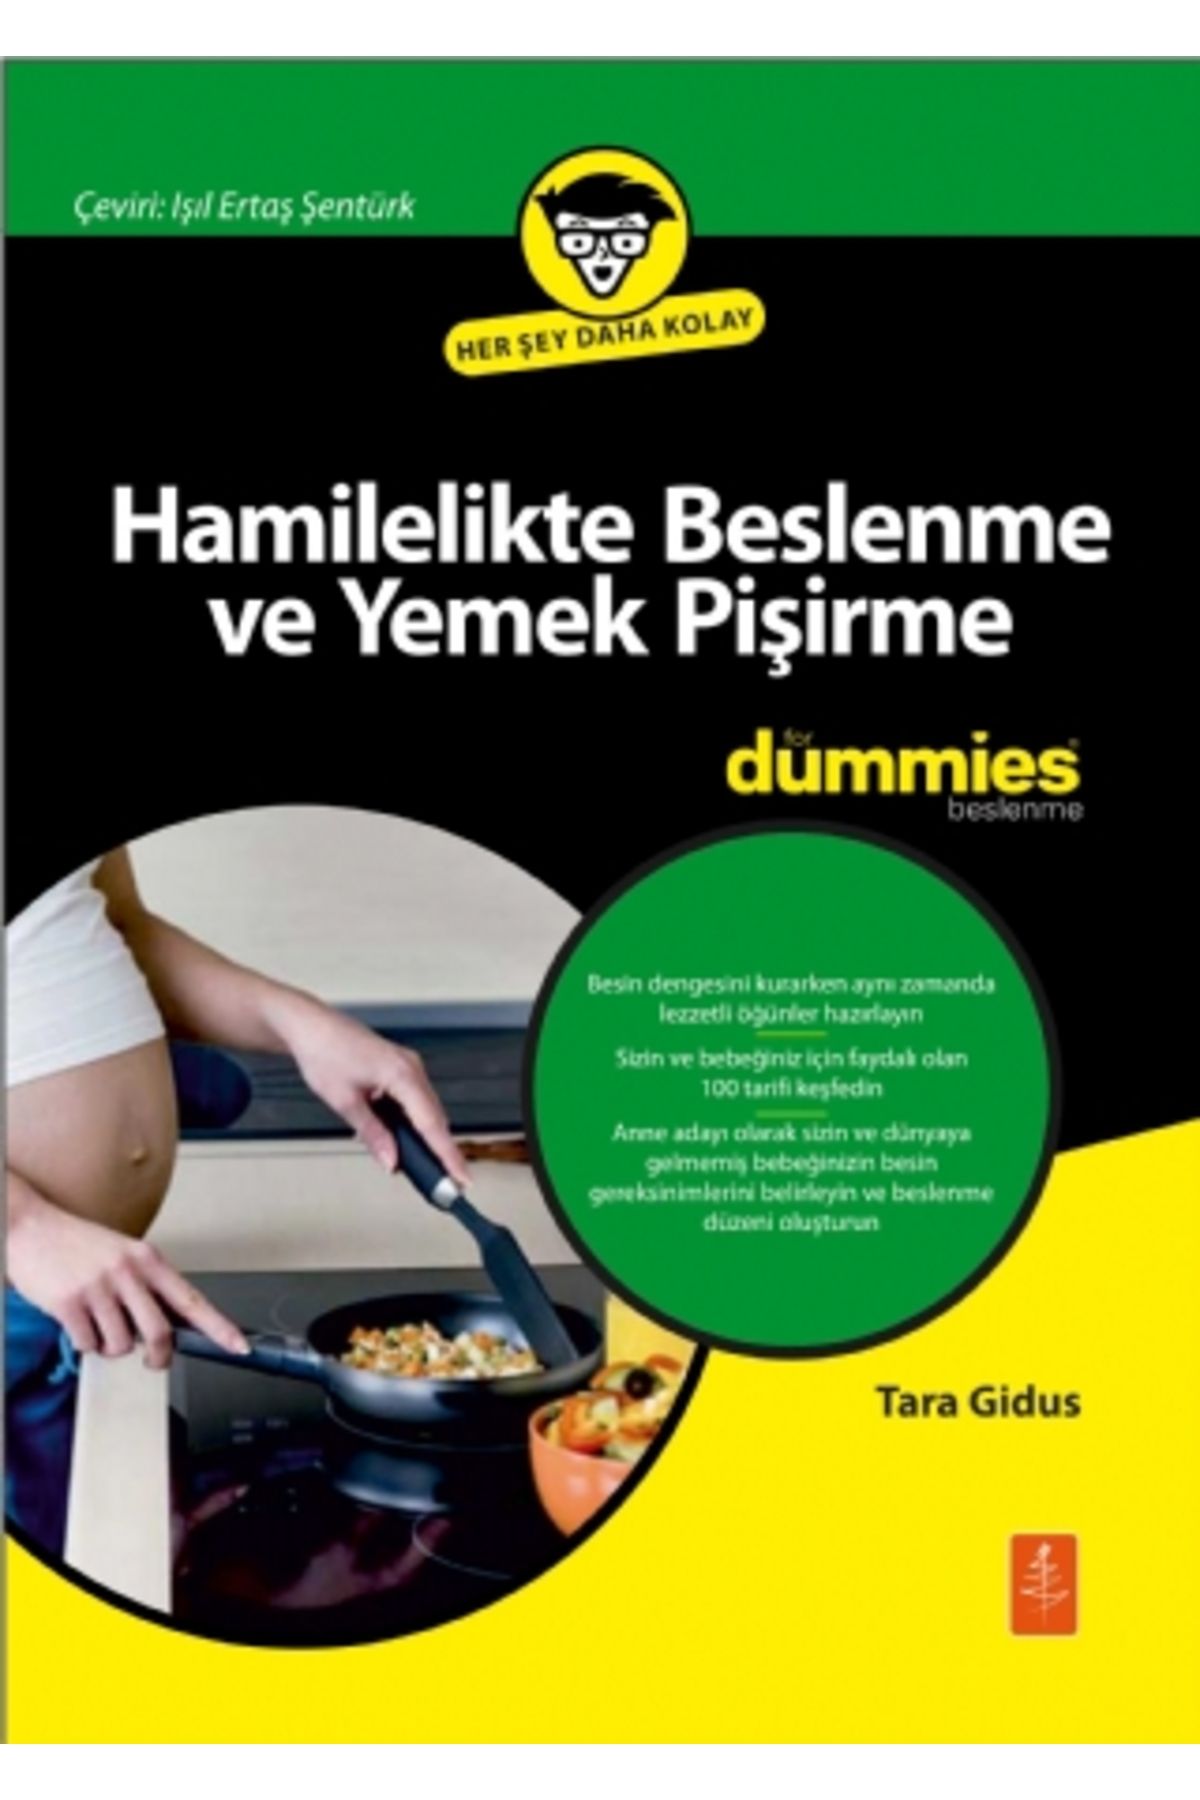 Genel Markalar Hamilelikte Beslenme Ve Yemek Pişirme For Dummies - Pregnancy Cooking & Nutrition For Dummies